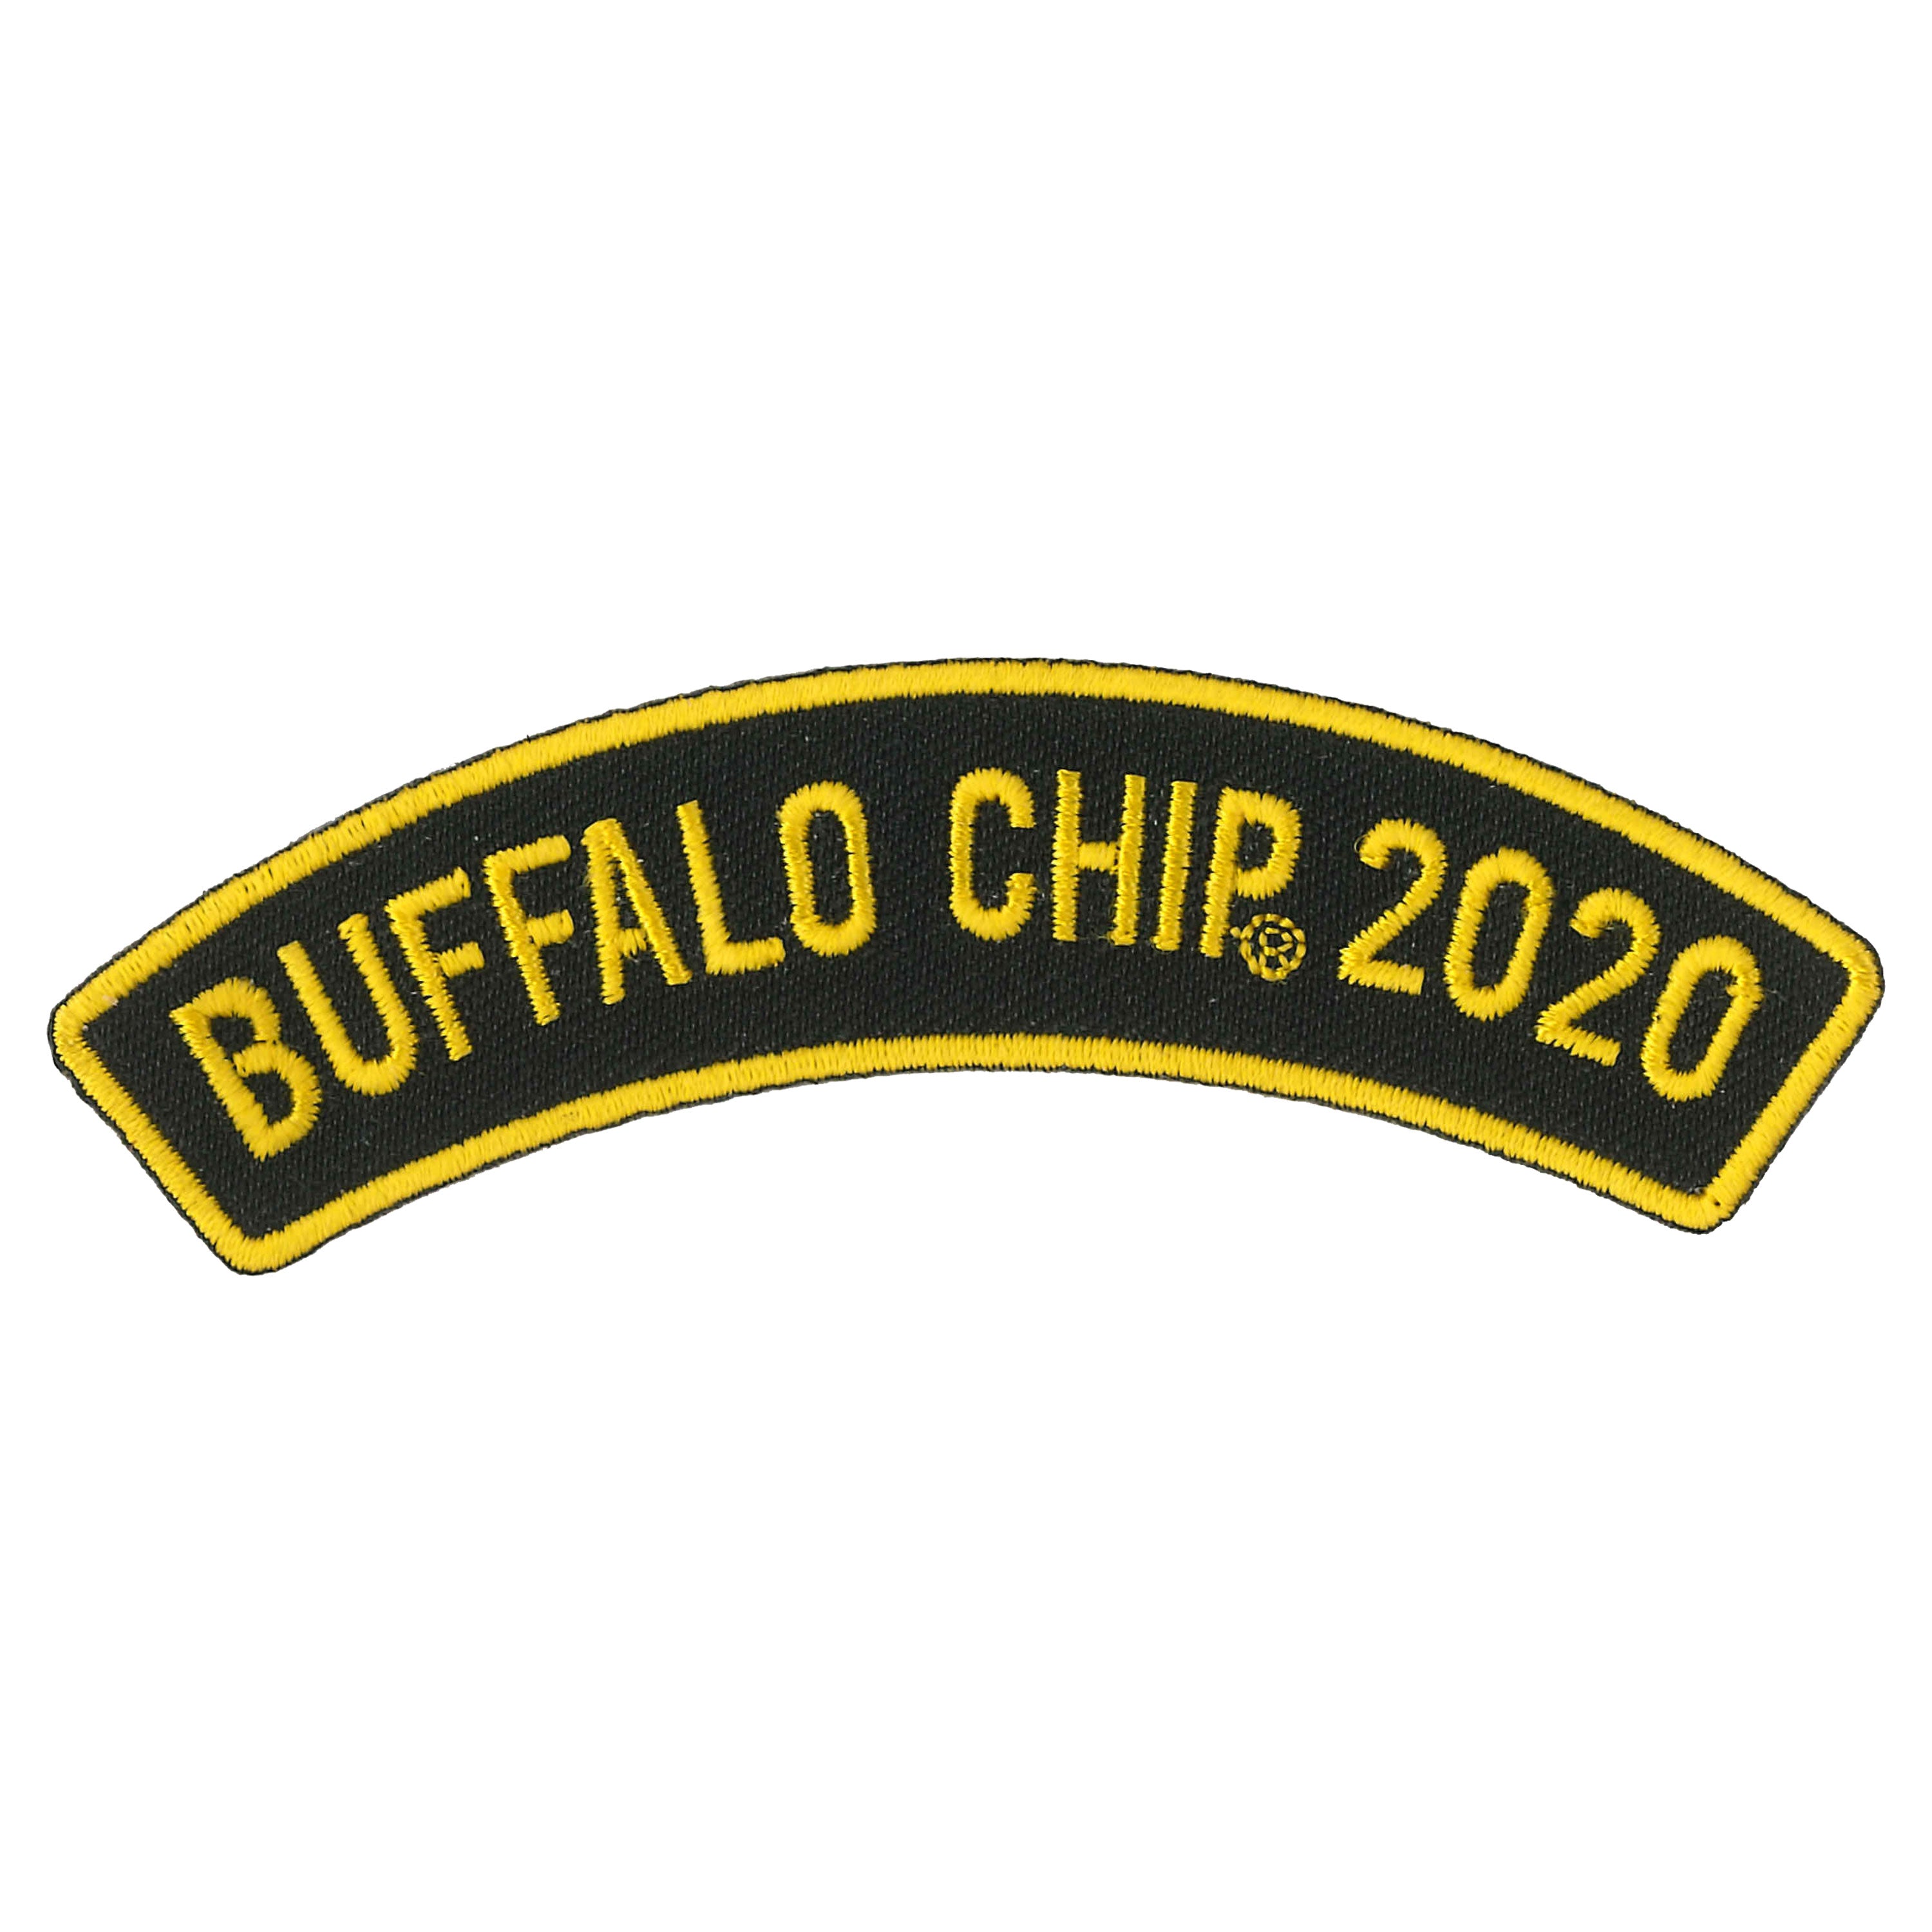 Chip Rocker 2020 Patch